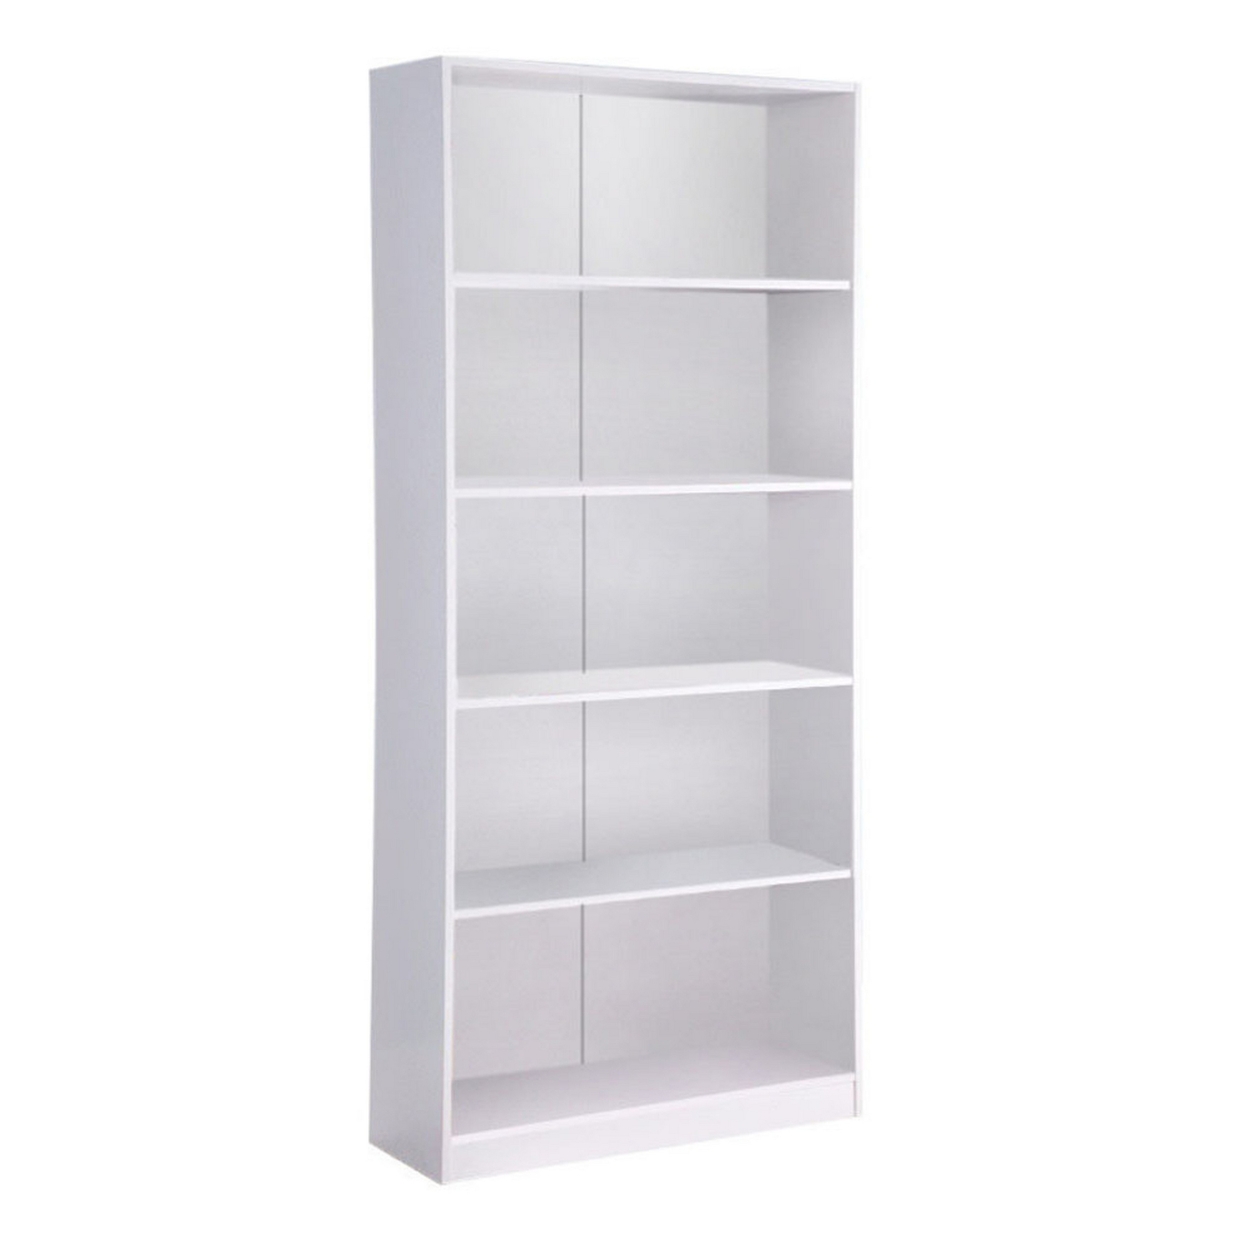 Minimalistic Yet Stylish Bookcase, White- Saltoro Sherpi